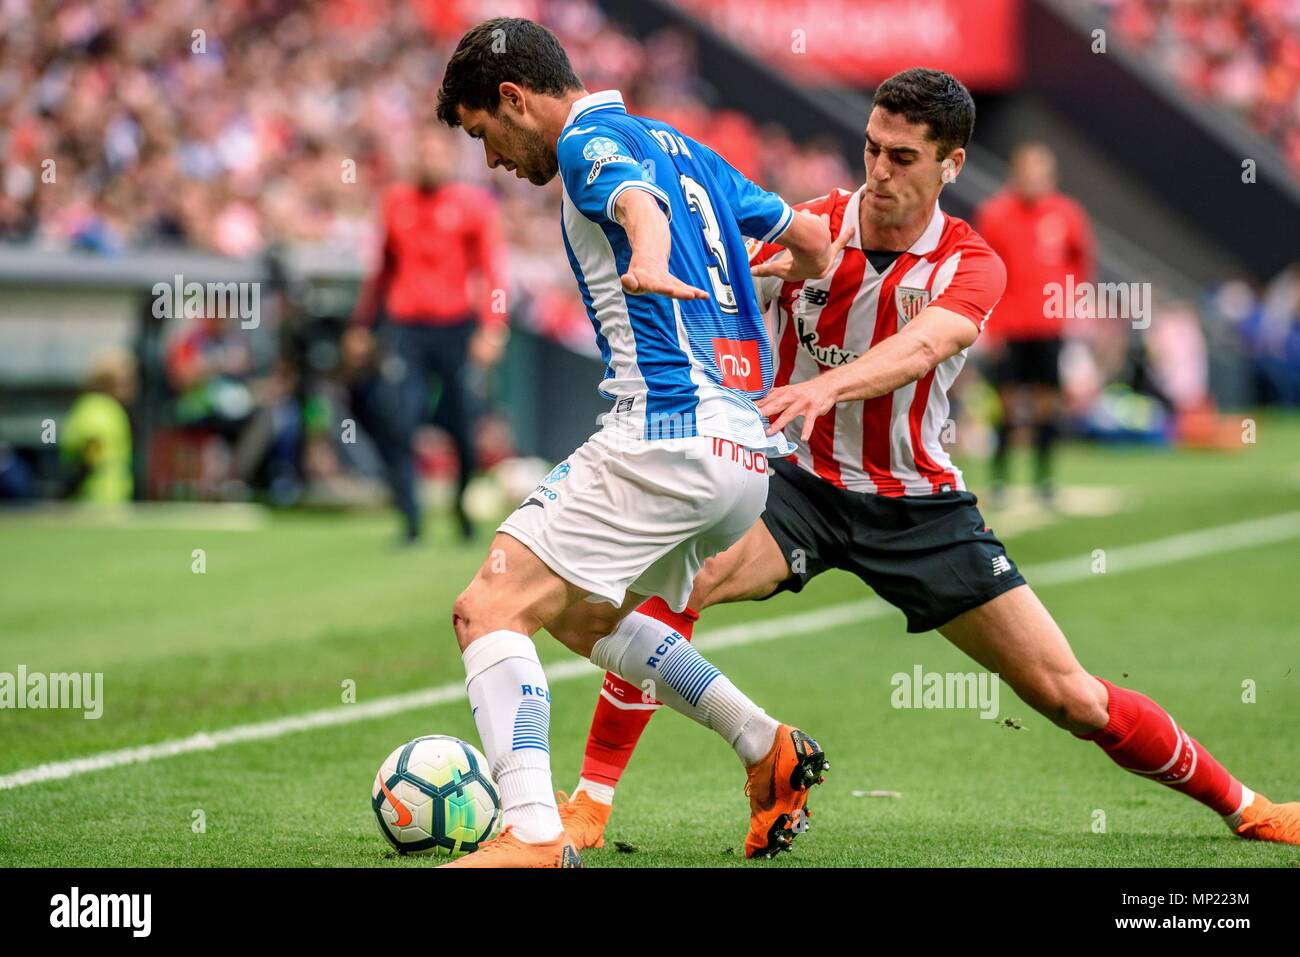 Bilbao, Spain. 20th May 2018. Athletic Bilbao's Sabin Merino (R) vies for  the ball against Espanyol's